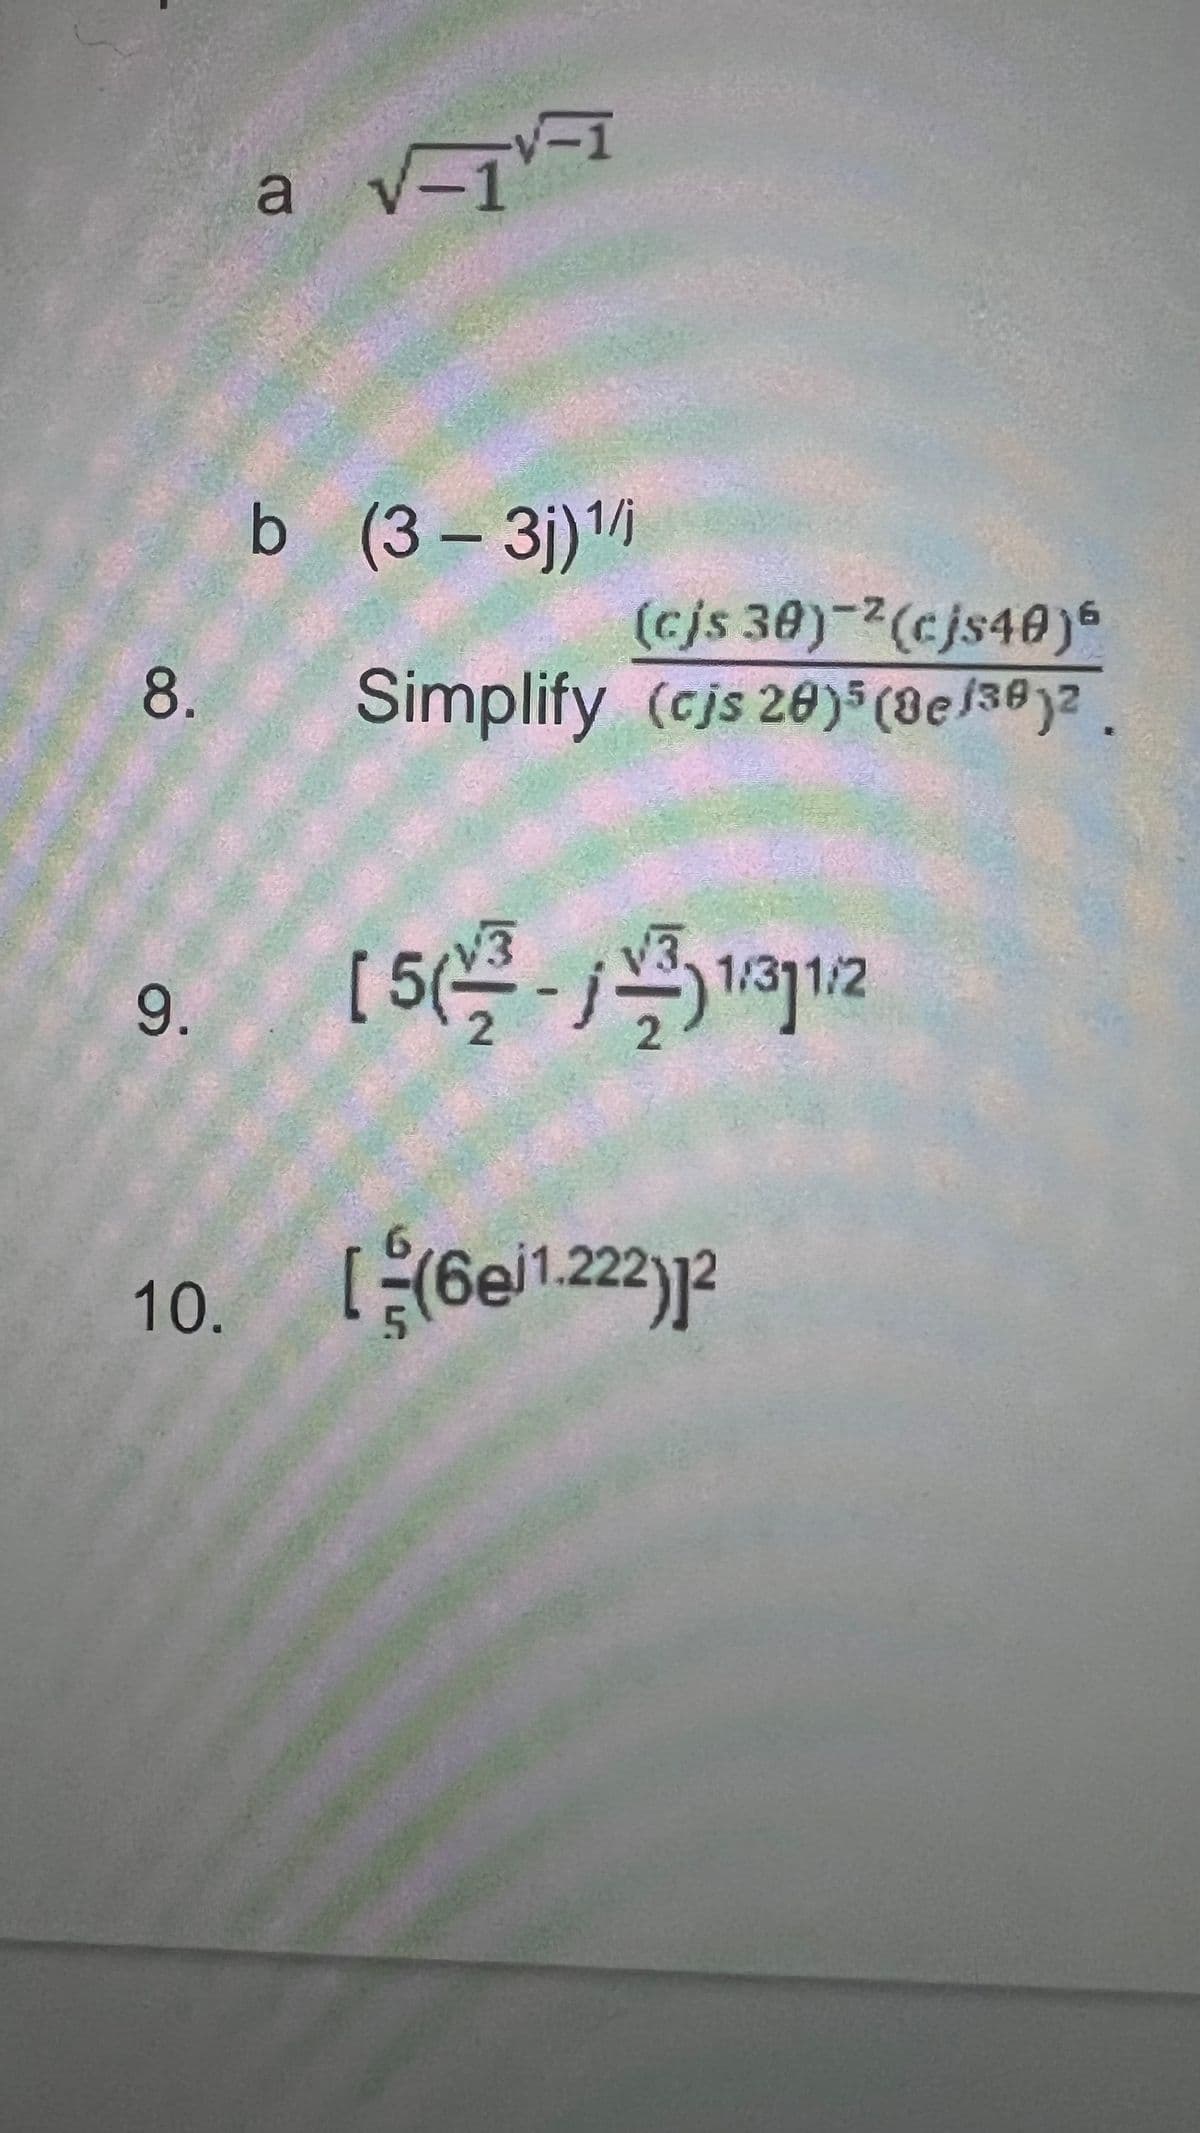 8.
9.
10.
a
V-IV=
√-1
√-1
b (3-3j)¹/i
(cjs 30)-²(cjs40)6
Simplify (cjs 20)5 (8e/38)².
[
2
1/311/2
[(6e1¹.222)]²